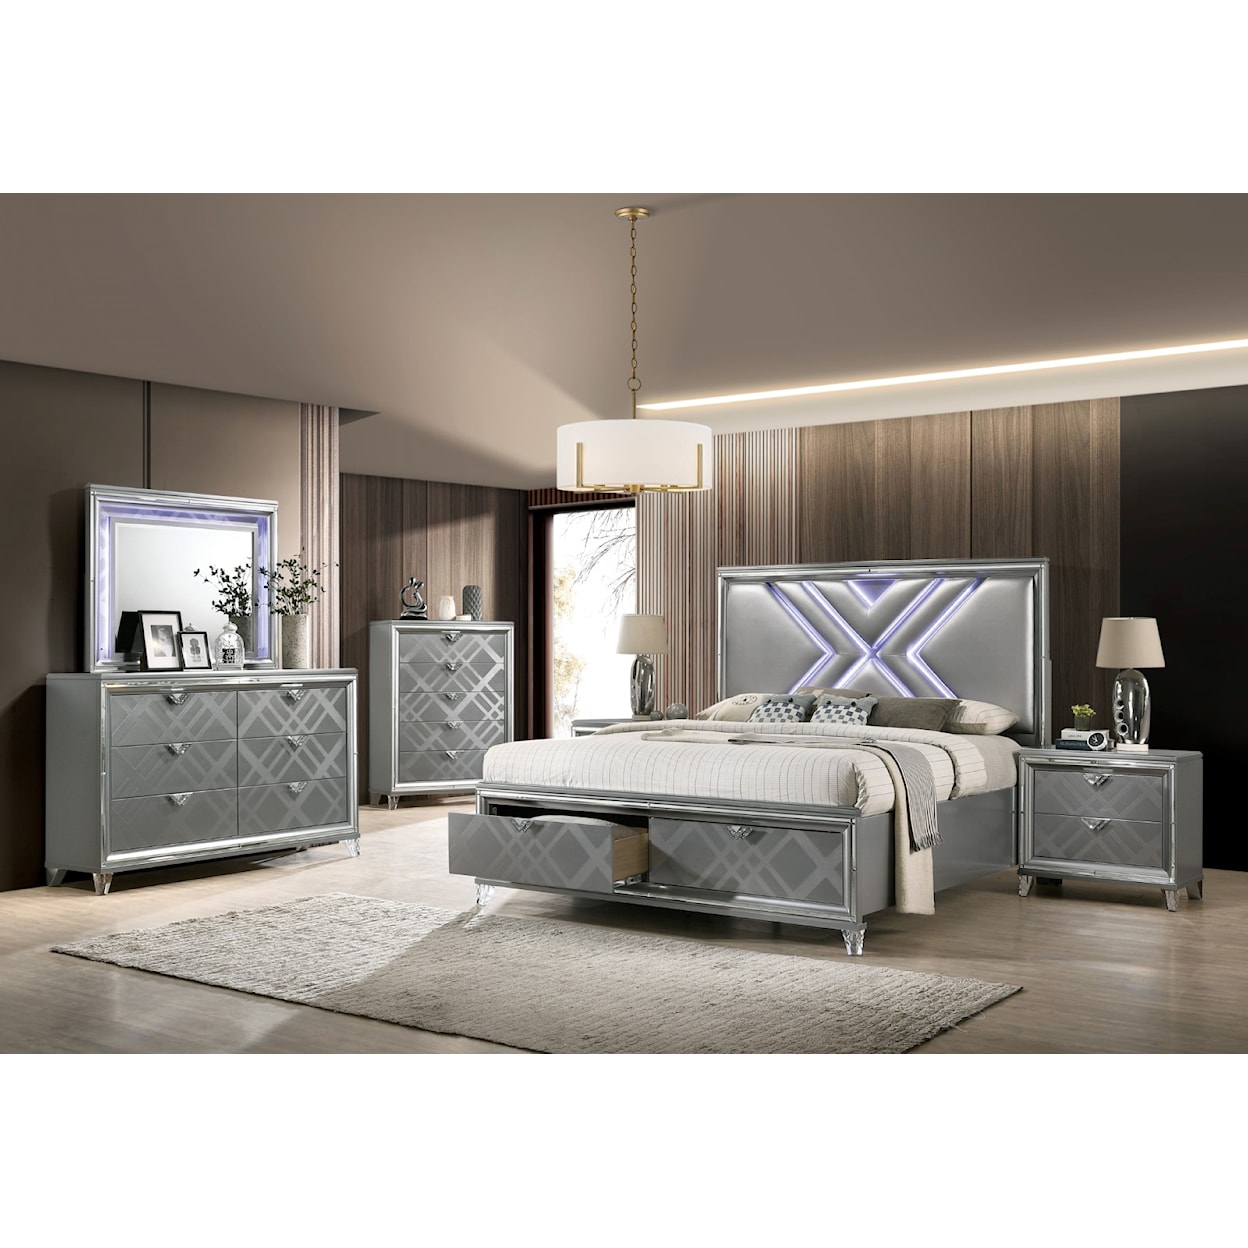 Furniture of America Emmeline California King Bedroom Group